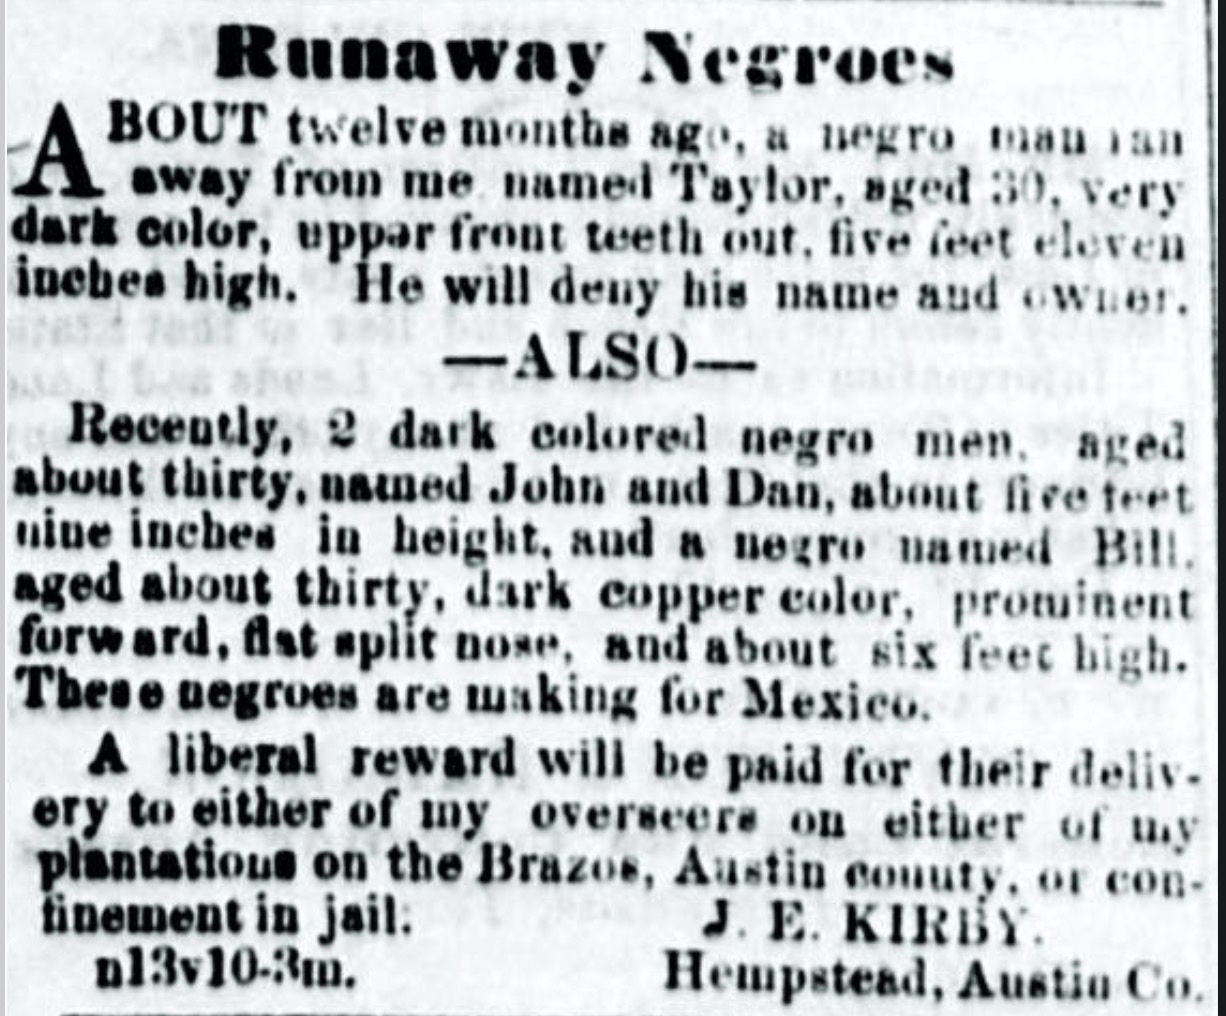 Figure 2 – Newspaper clip announcing a reward for the recapture of Dan, John, and Bill. Source: John Marshal, “Runaway Negroes,” Texas Gazette, November 6, 1858.